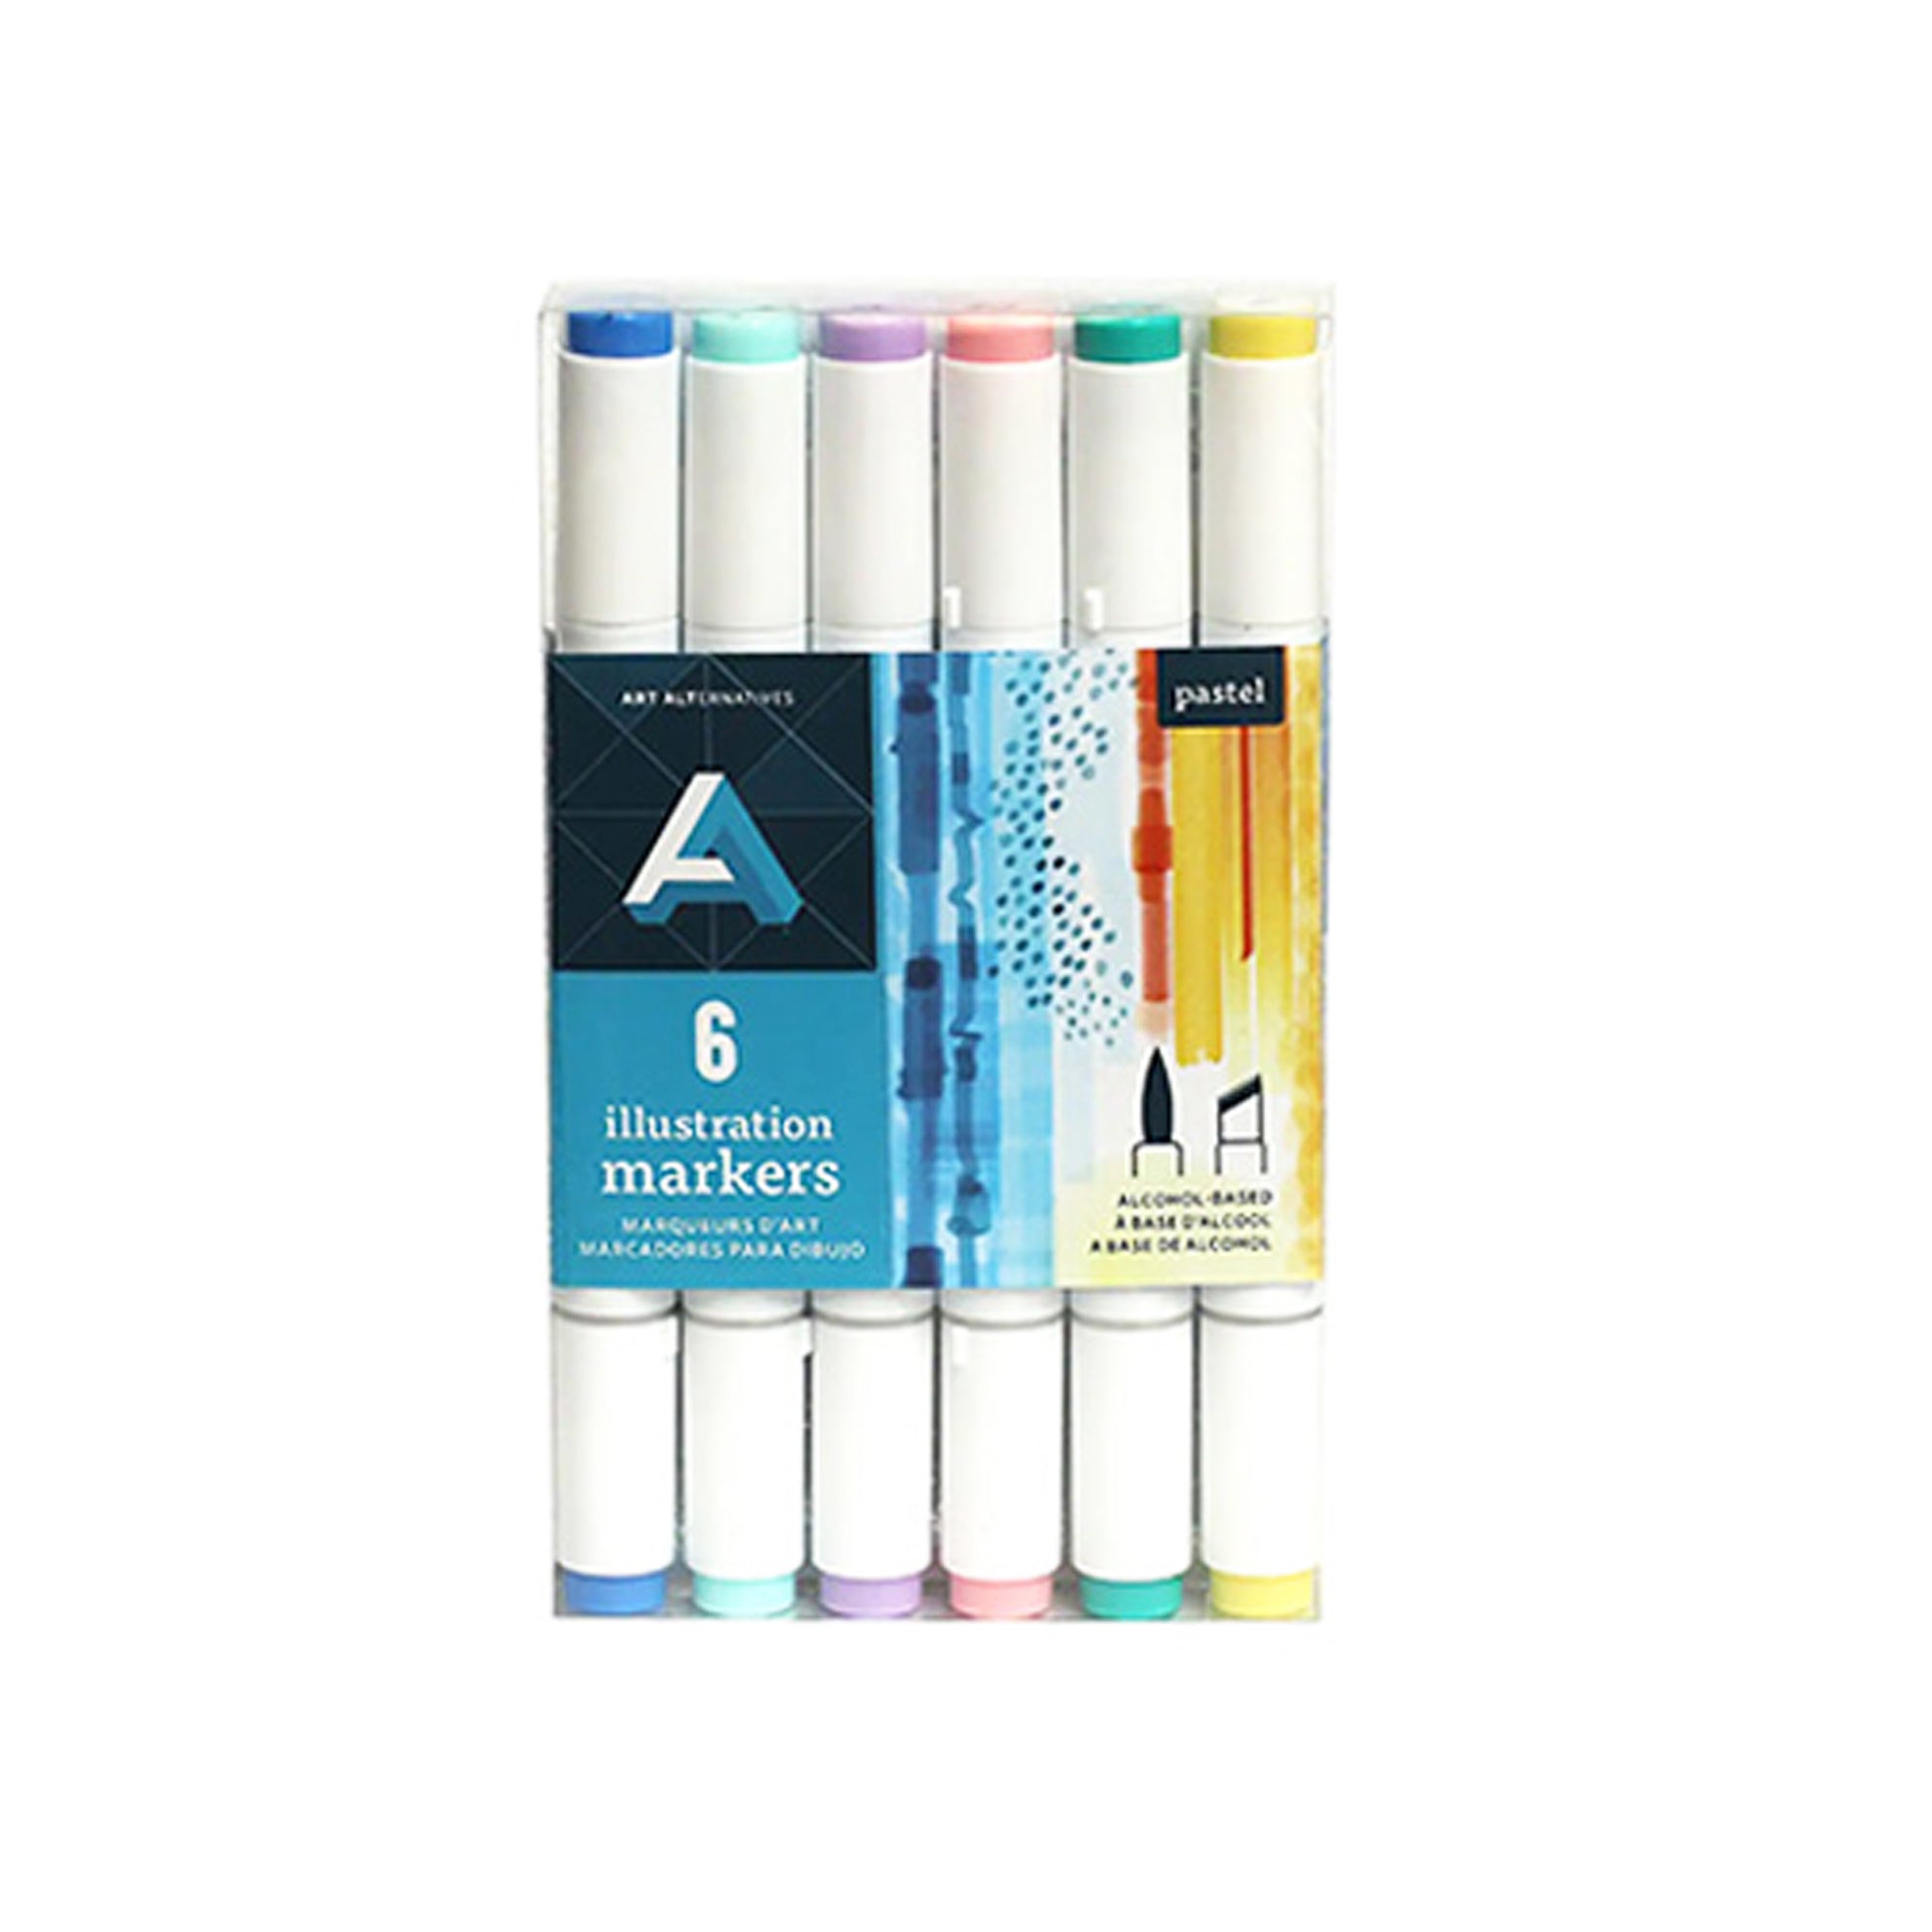 art alternative 6 pack of illustration pastel markers